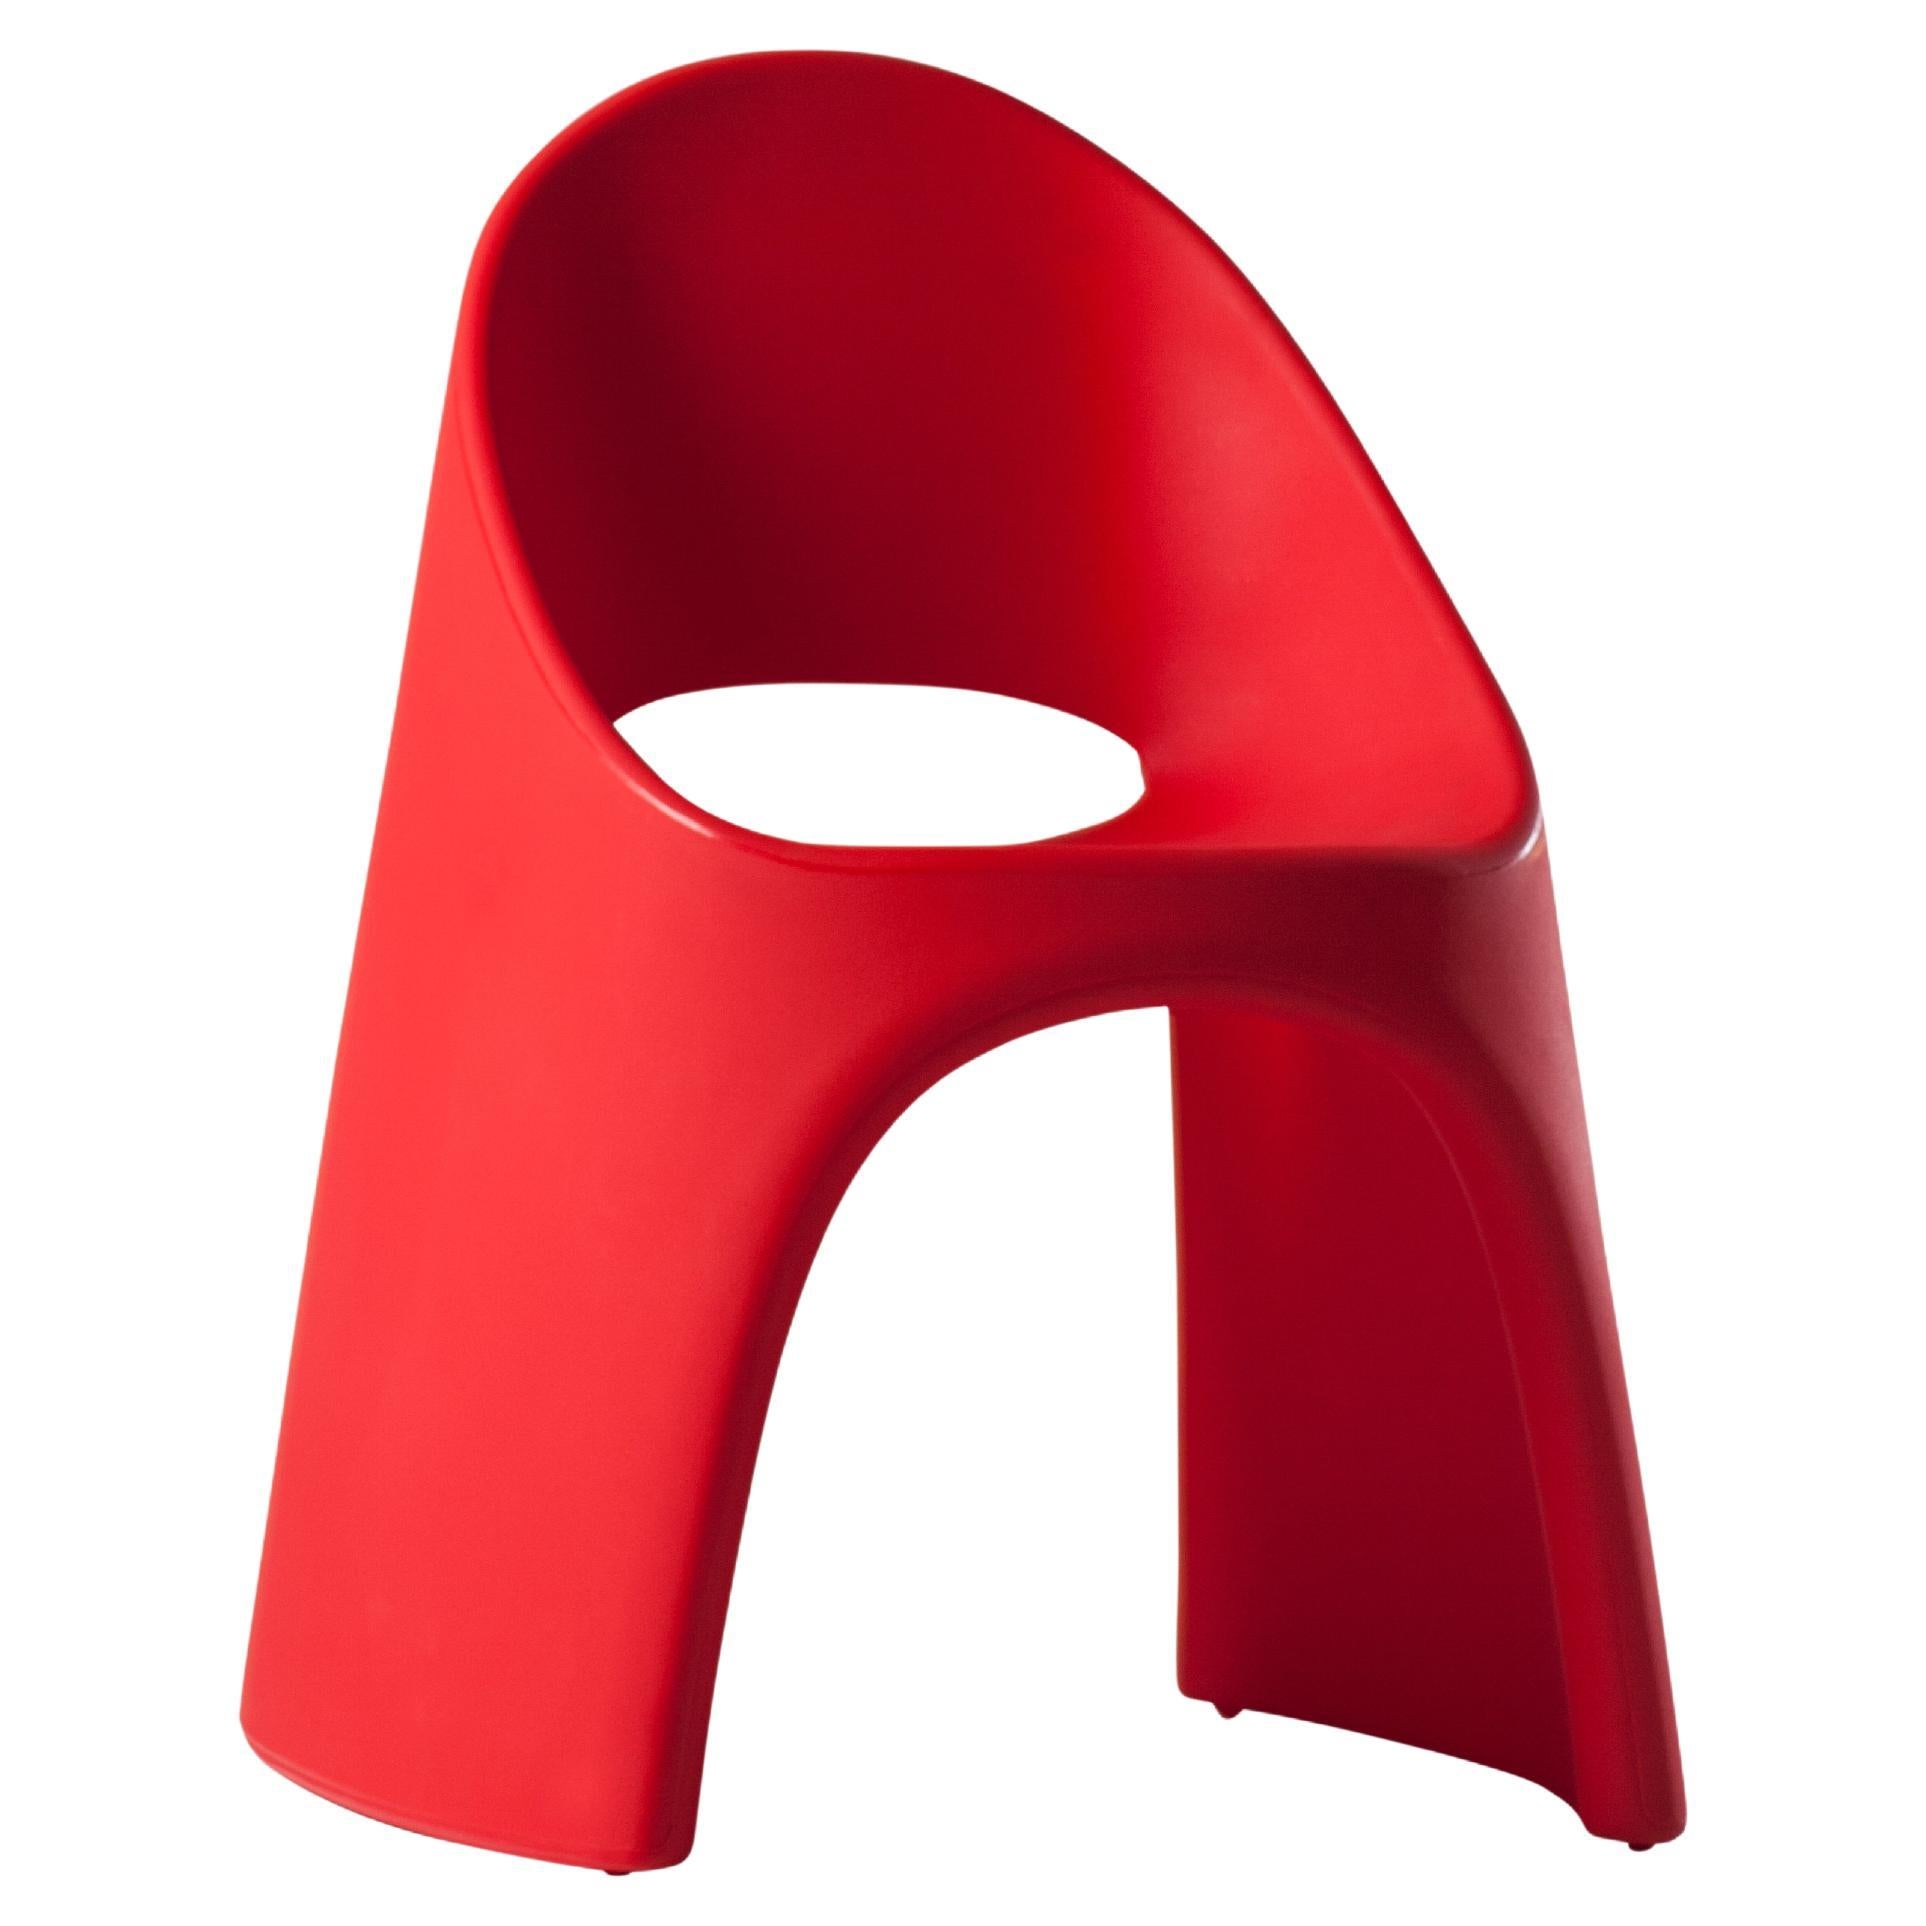 Slide Design Amélie Stuhl in Flammenrot von Italo Pertichini im Angebot